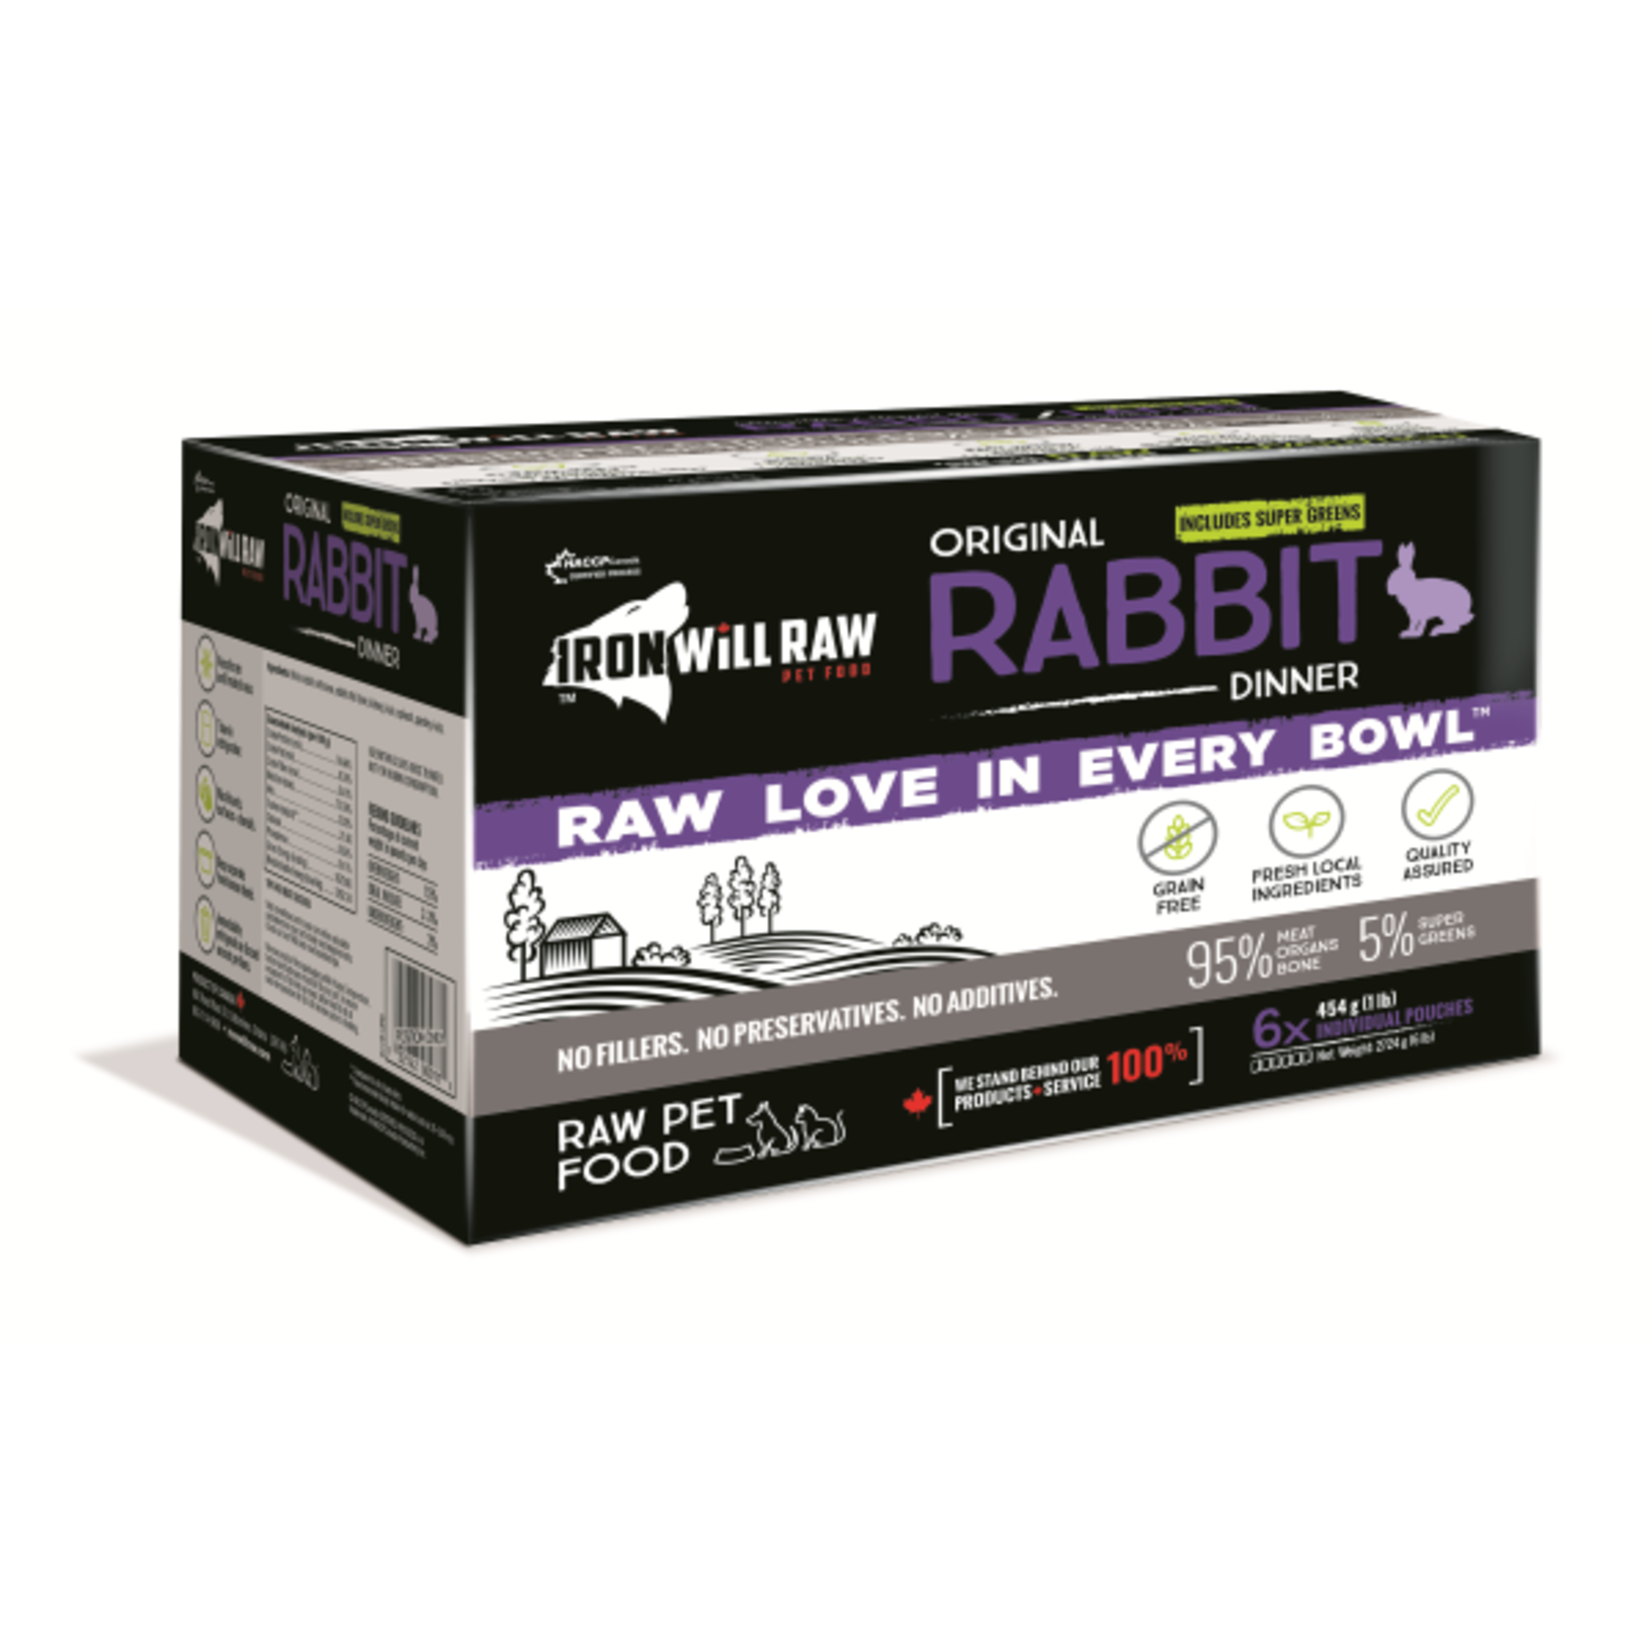 IRON WILL RAW Iron Will Raw Dog GF Original Rabbit Dinner 6/1 lb